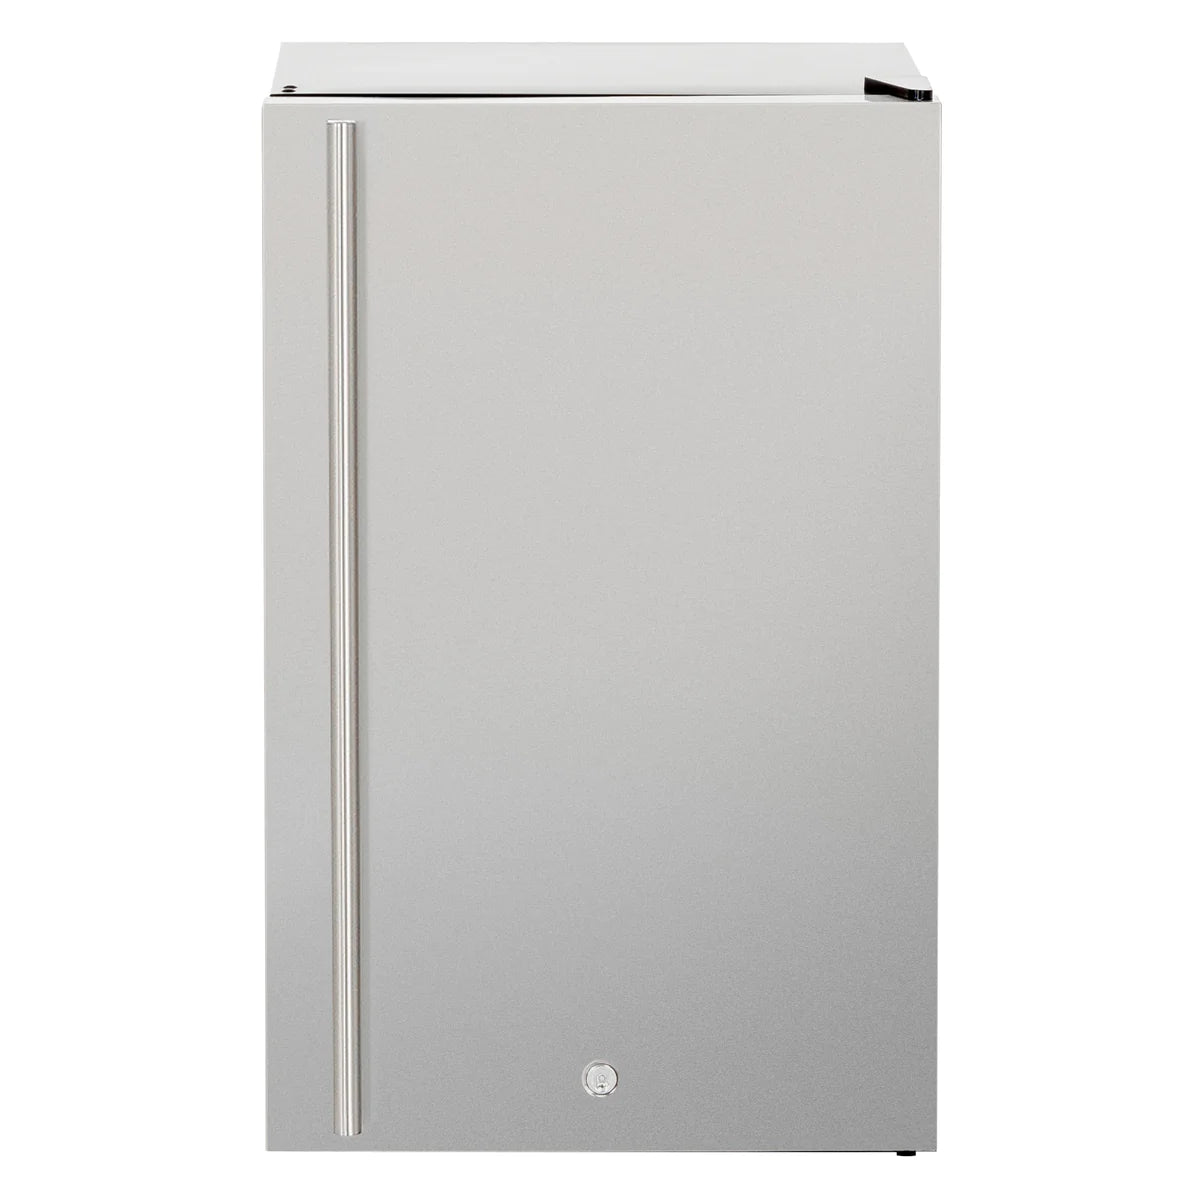 21" 4.2c Deluxe Compact Refrigerator